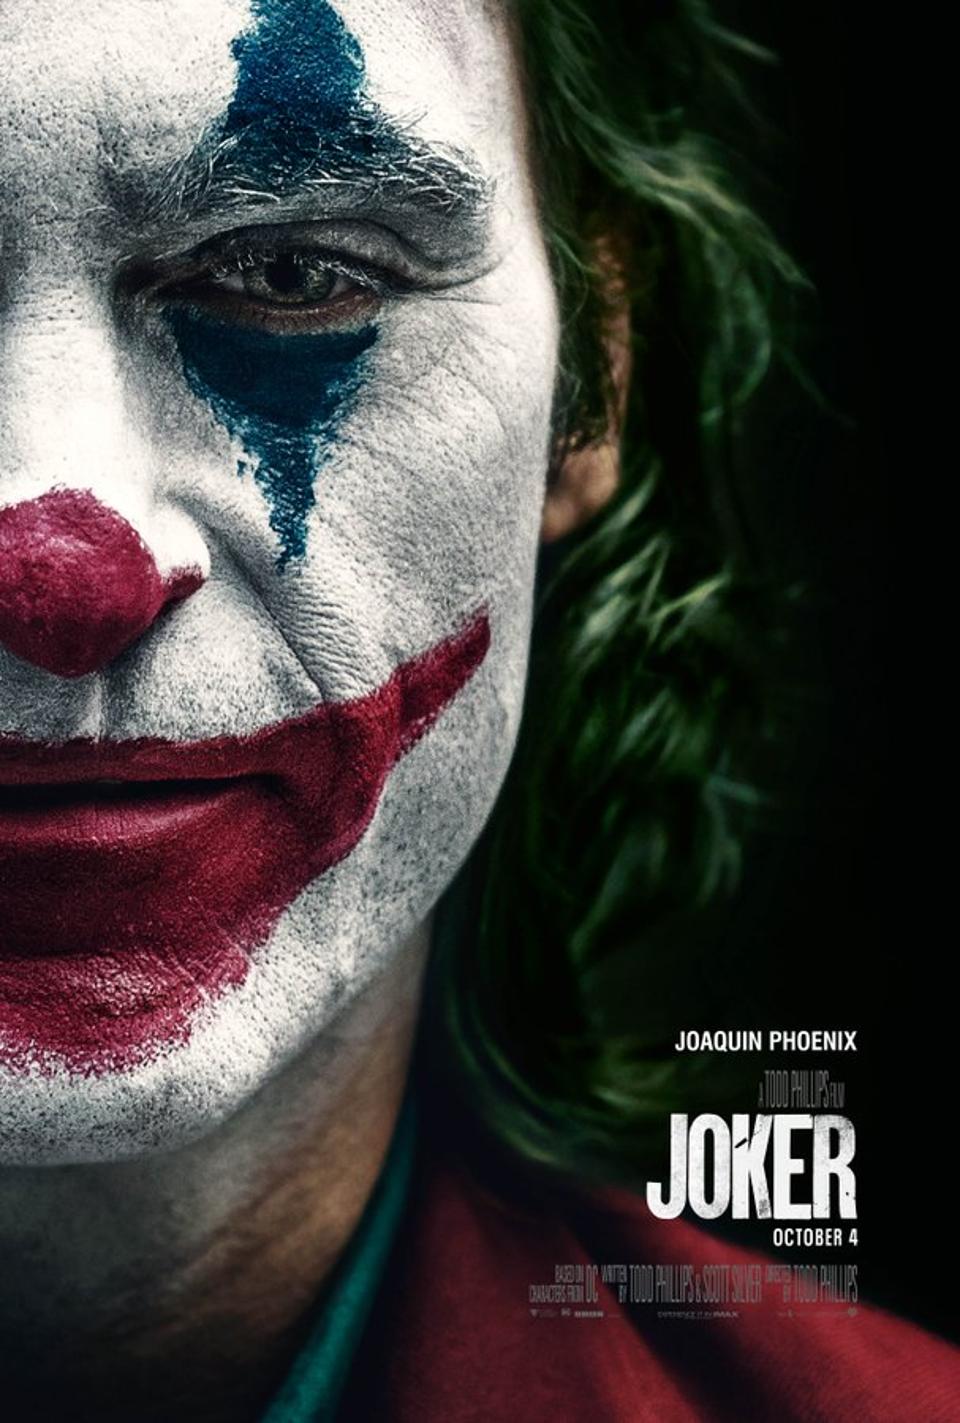 Joaquin Phoenix’s ‘Unusual’ Preparation For Joker Role